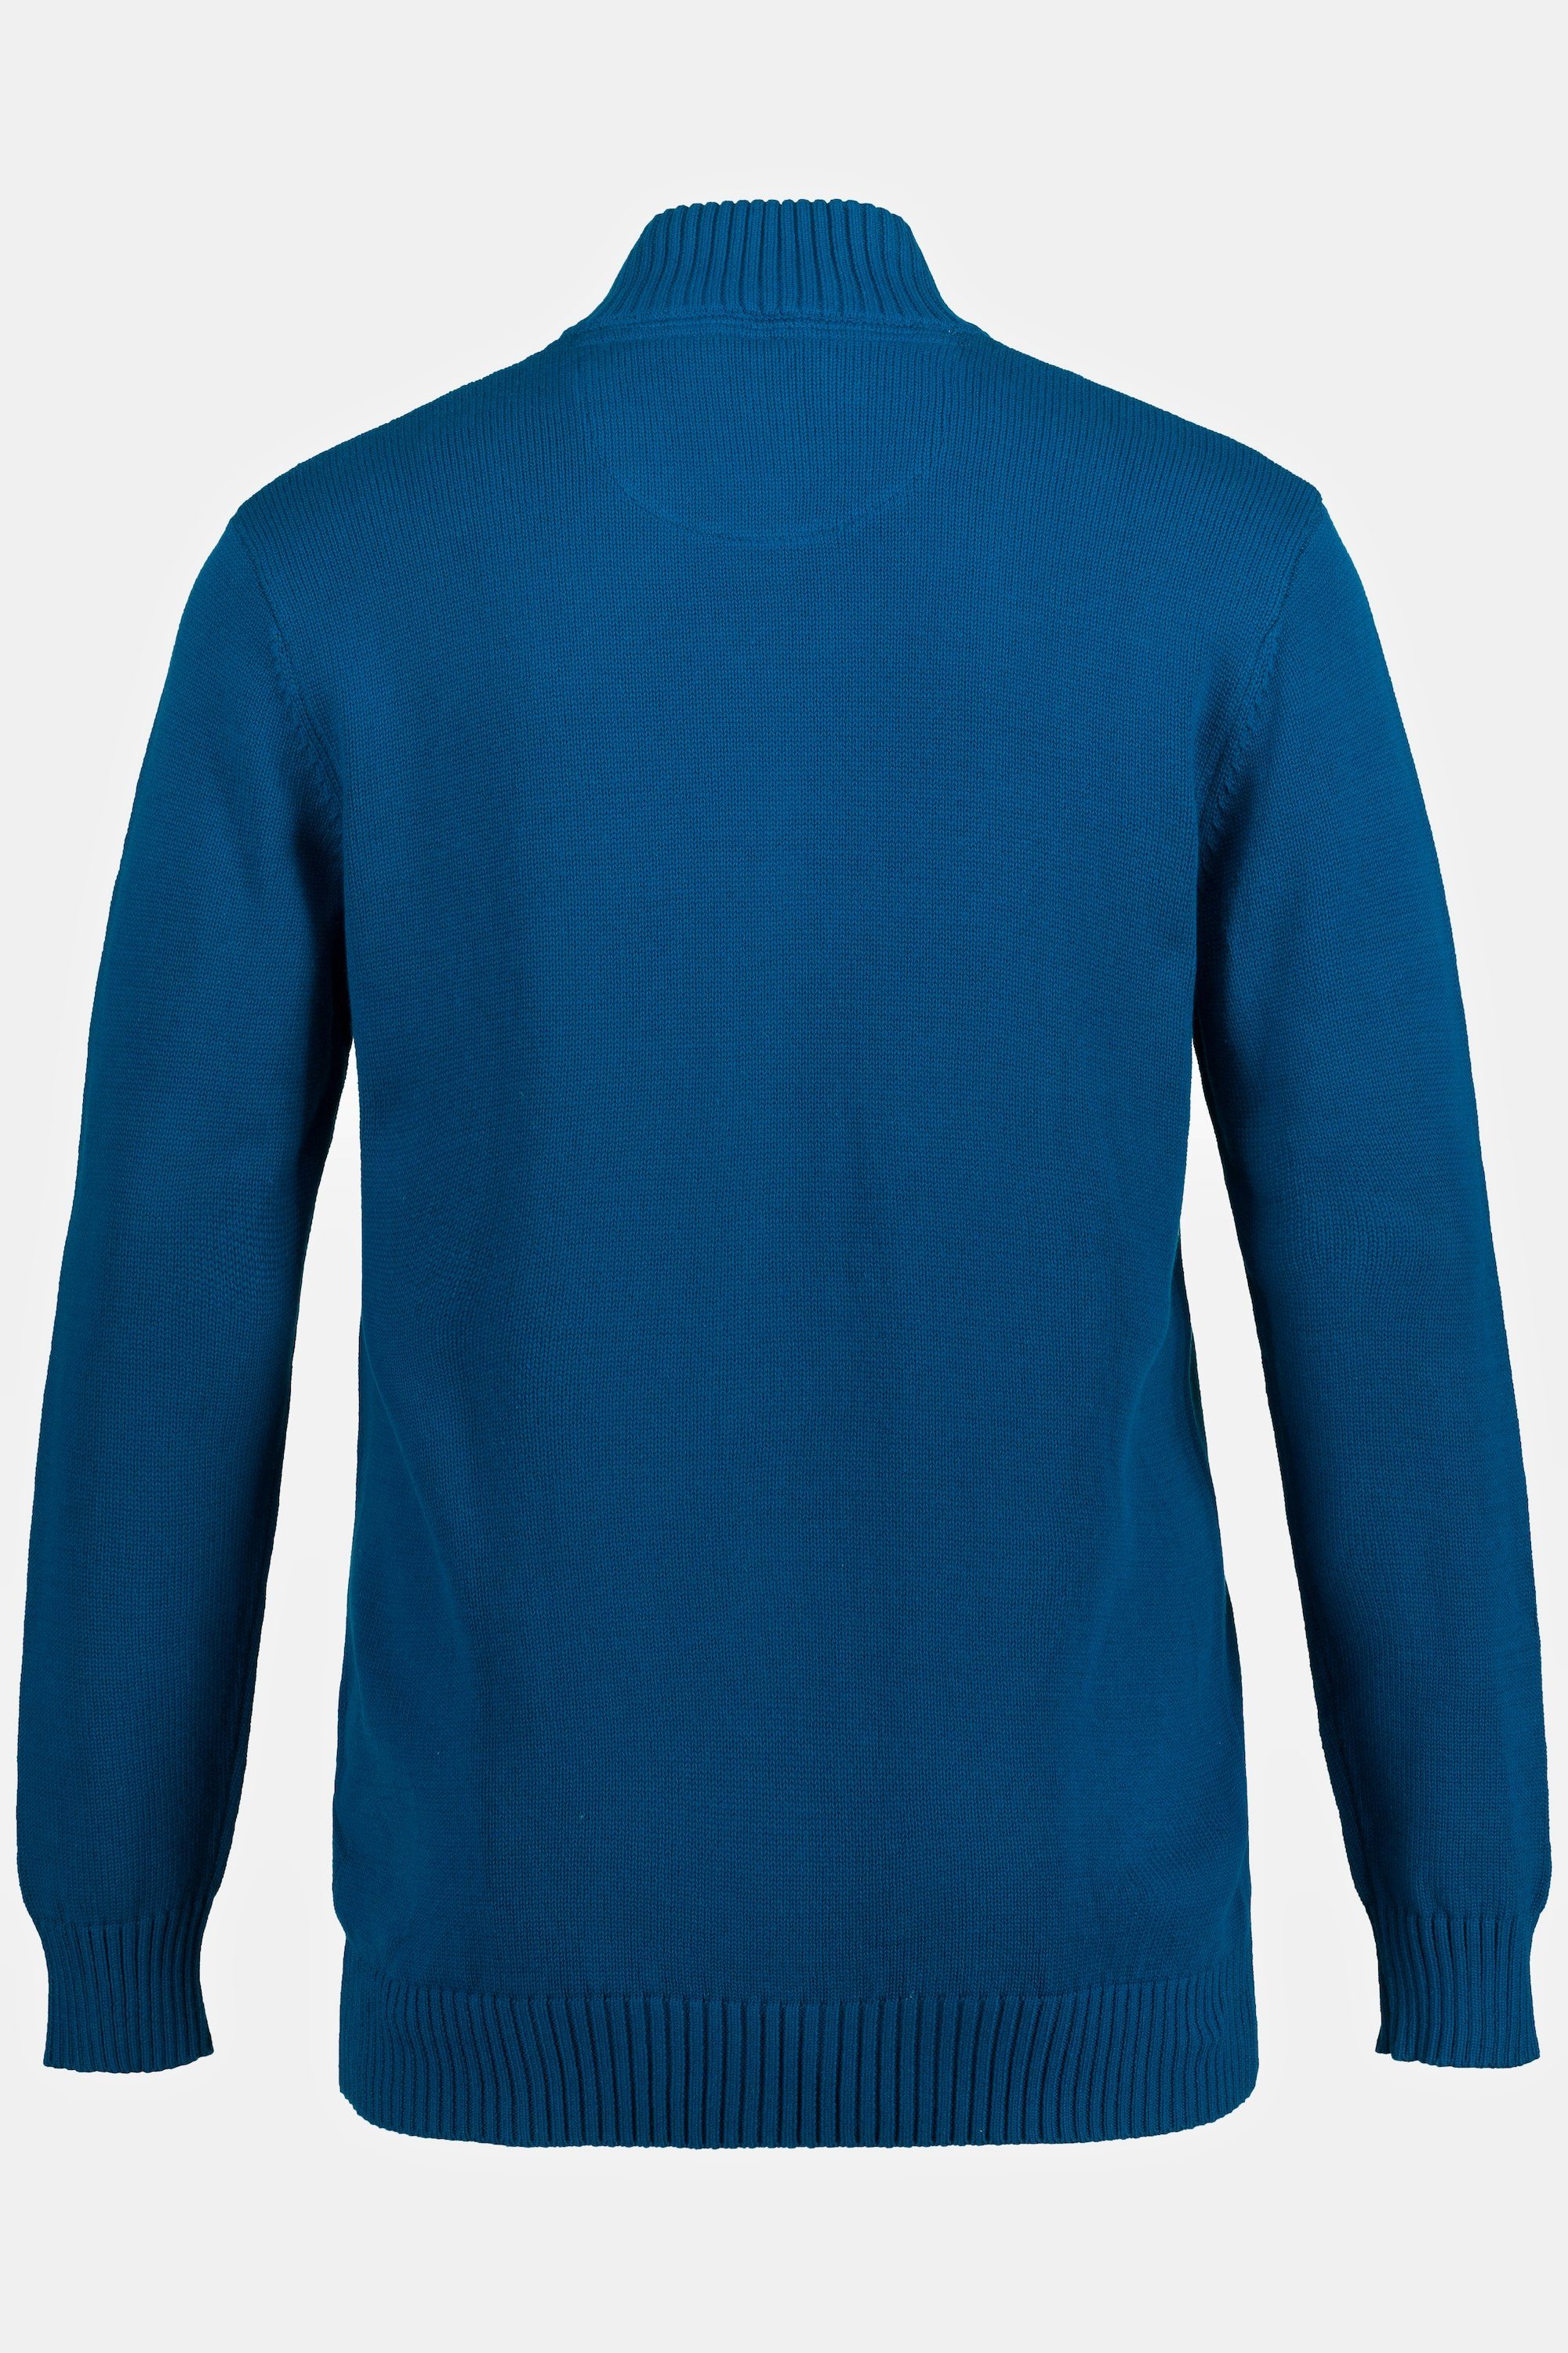 Strickjacke blaugrün Poloshirt Rippbündchen JP1880 Stehkragen